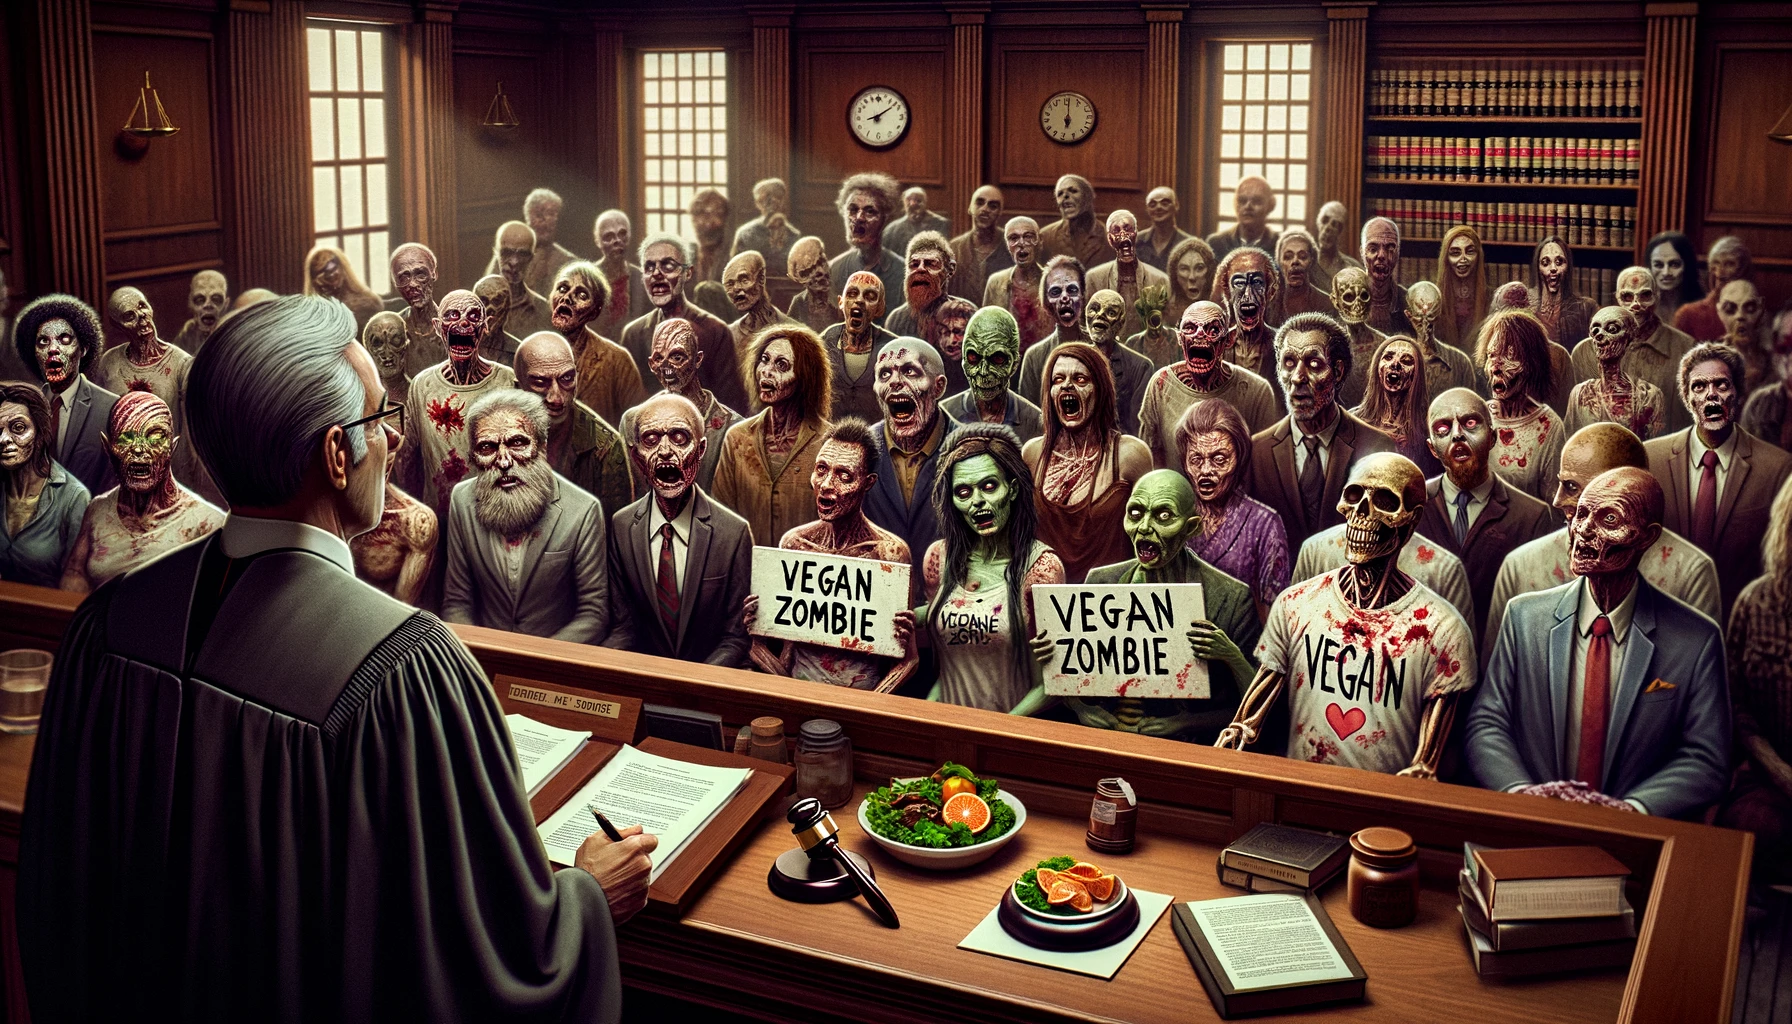 zombies-can-be-vegan-too-csdn-crustian-satirical-daily-news